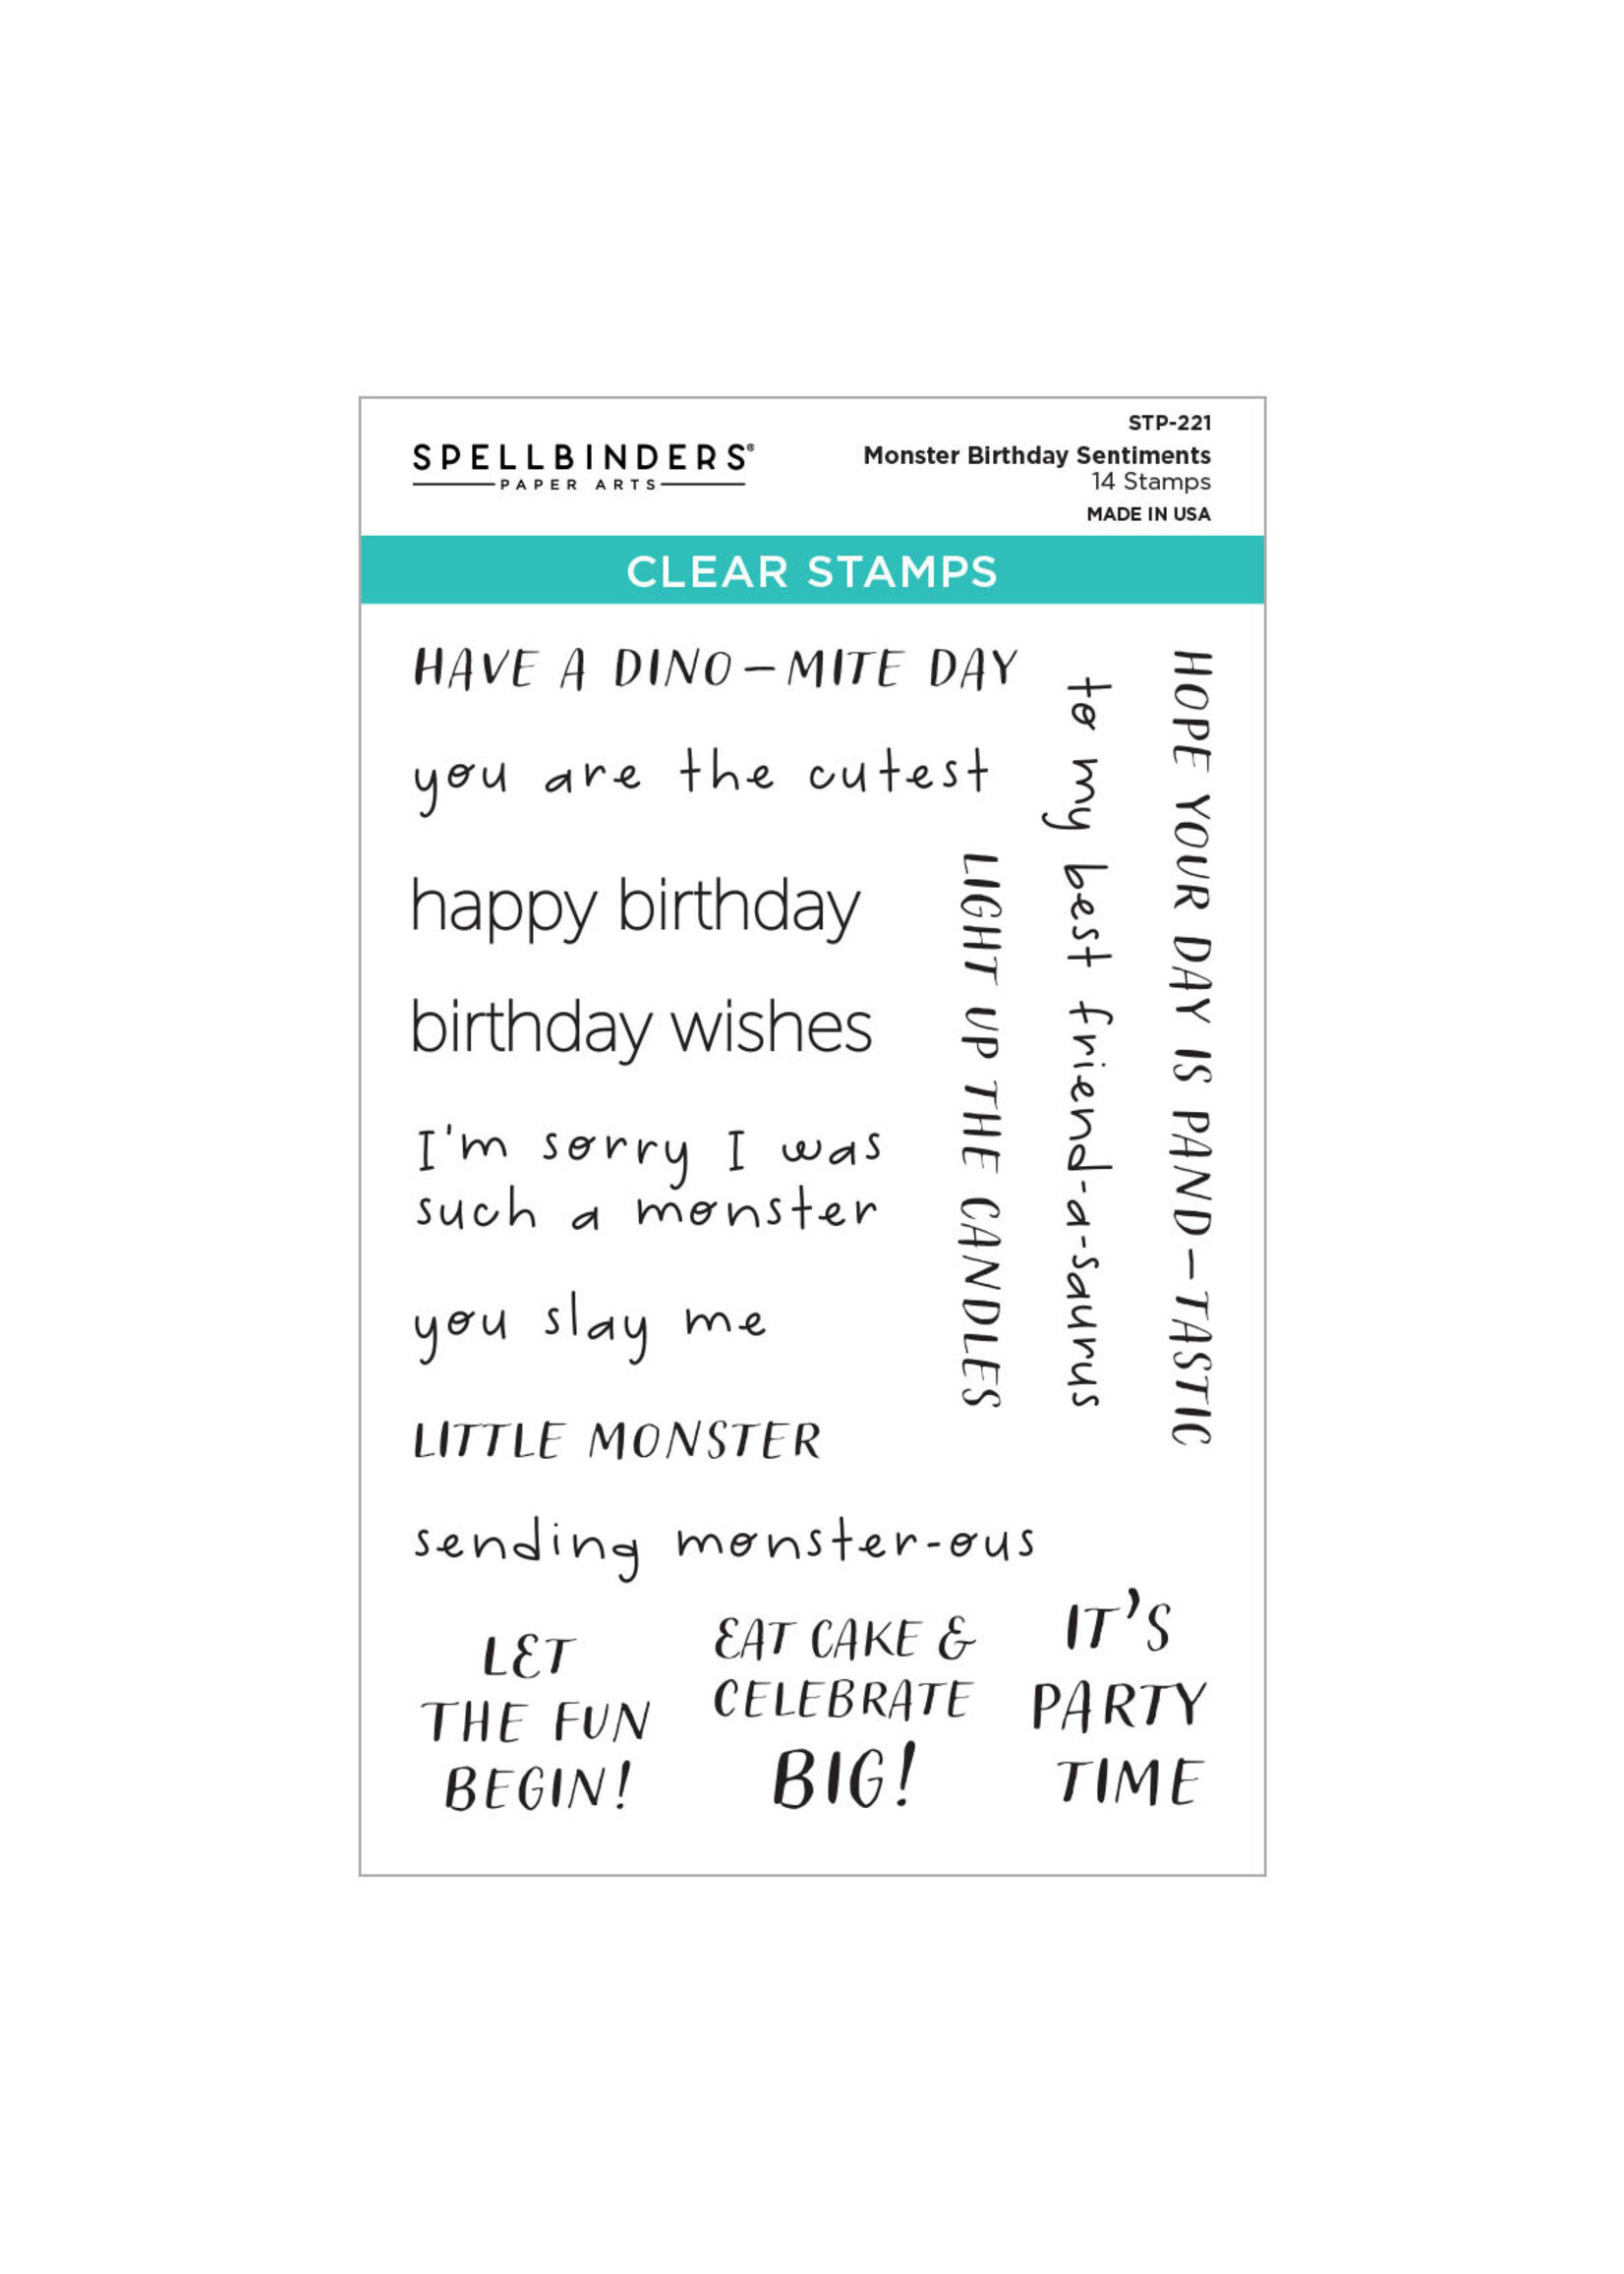 spellbinders Monster Birthday Sentiments Stamp